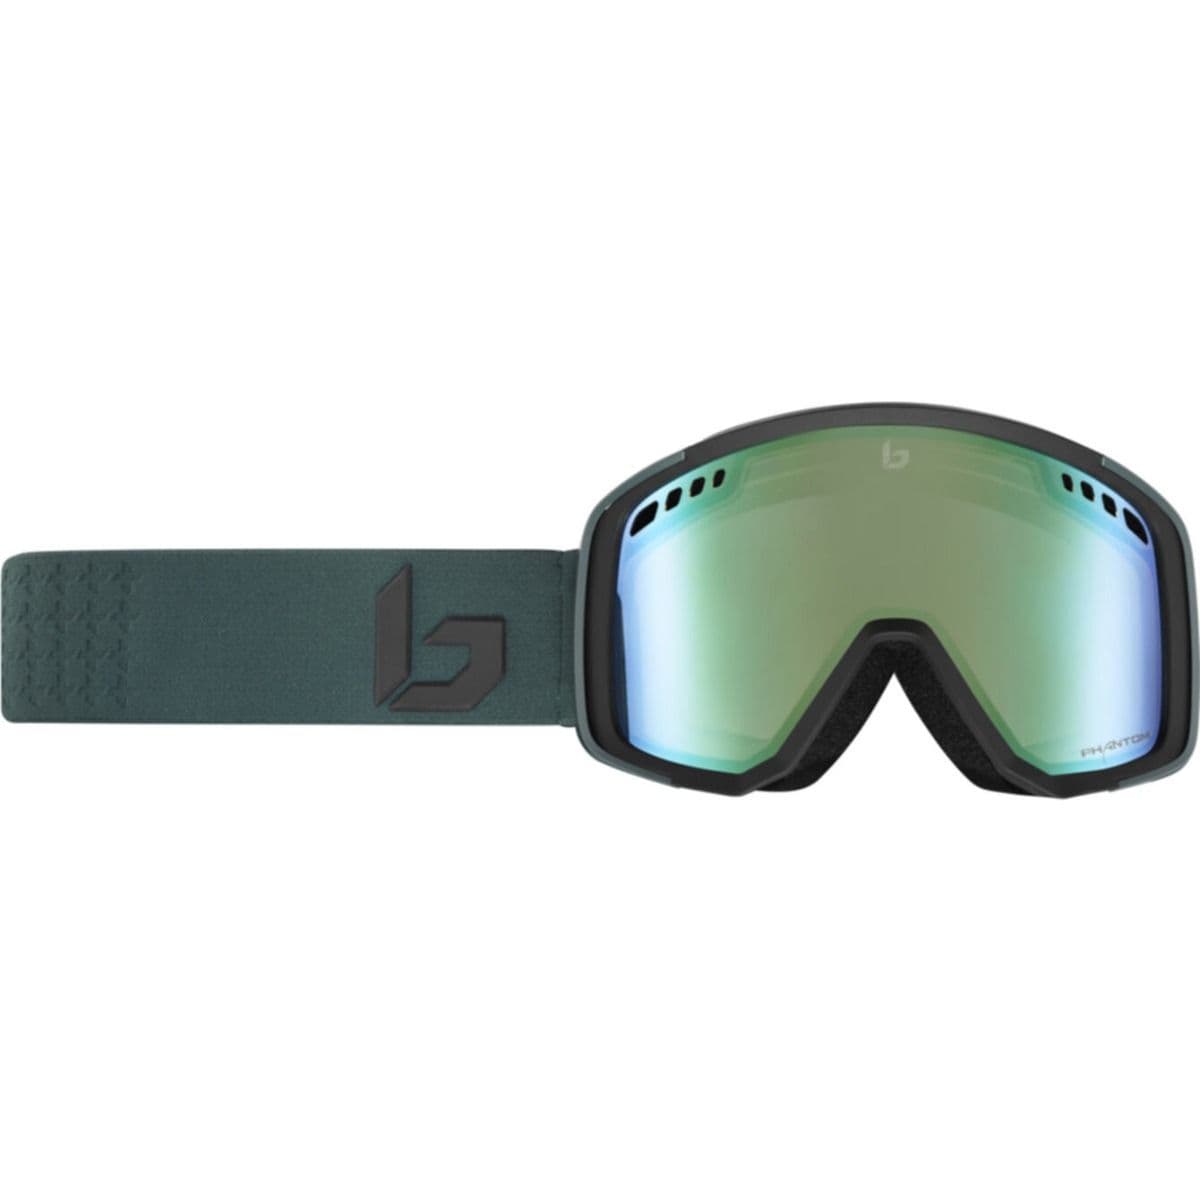 Bolle Mammoth Ski Goggles